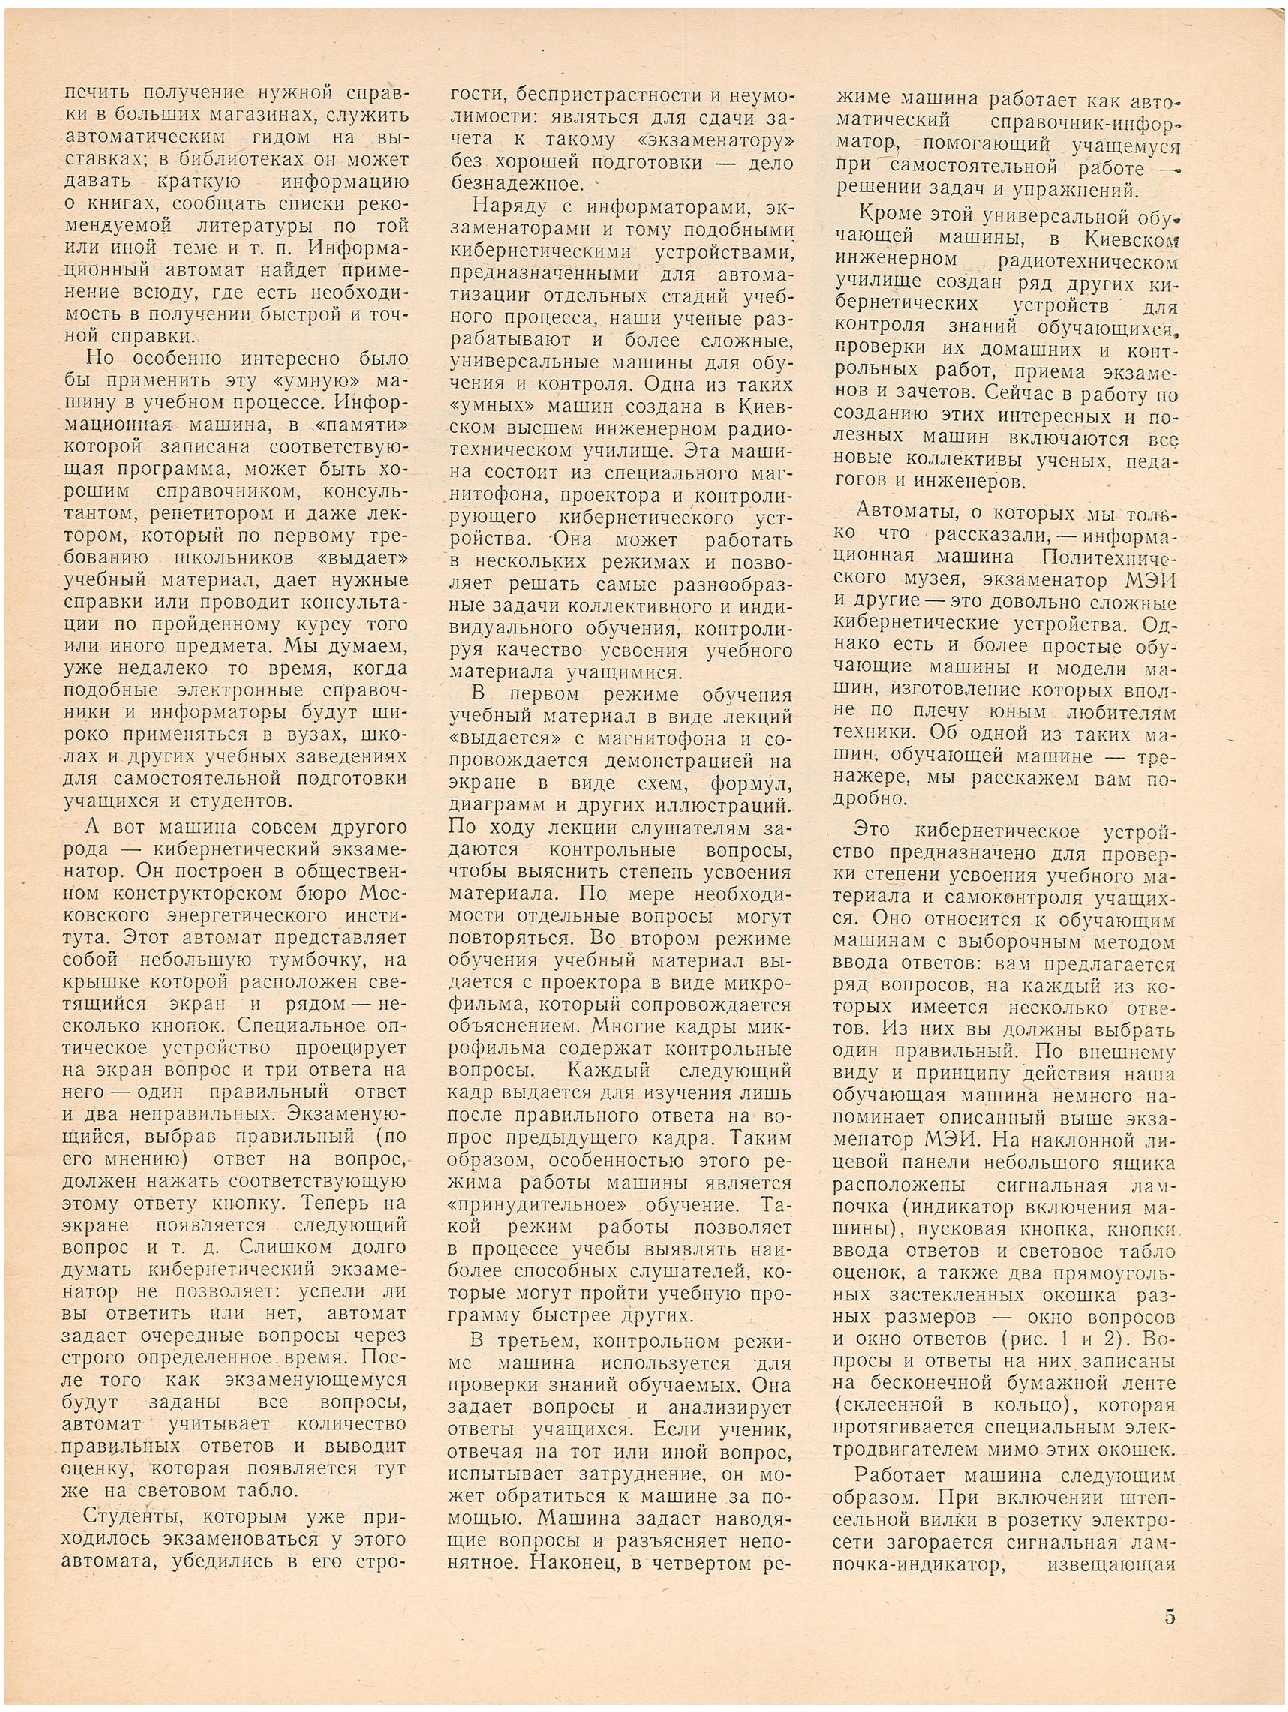 ЮМК 9, 1964, 5 c.